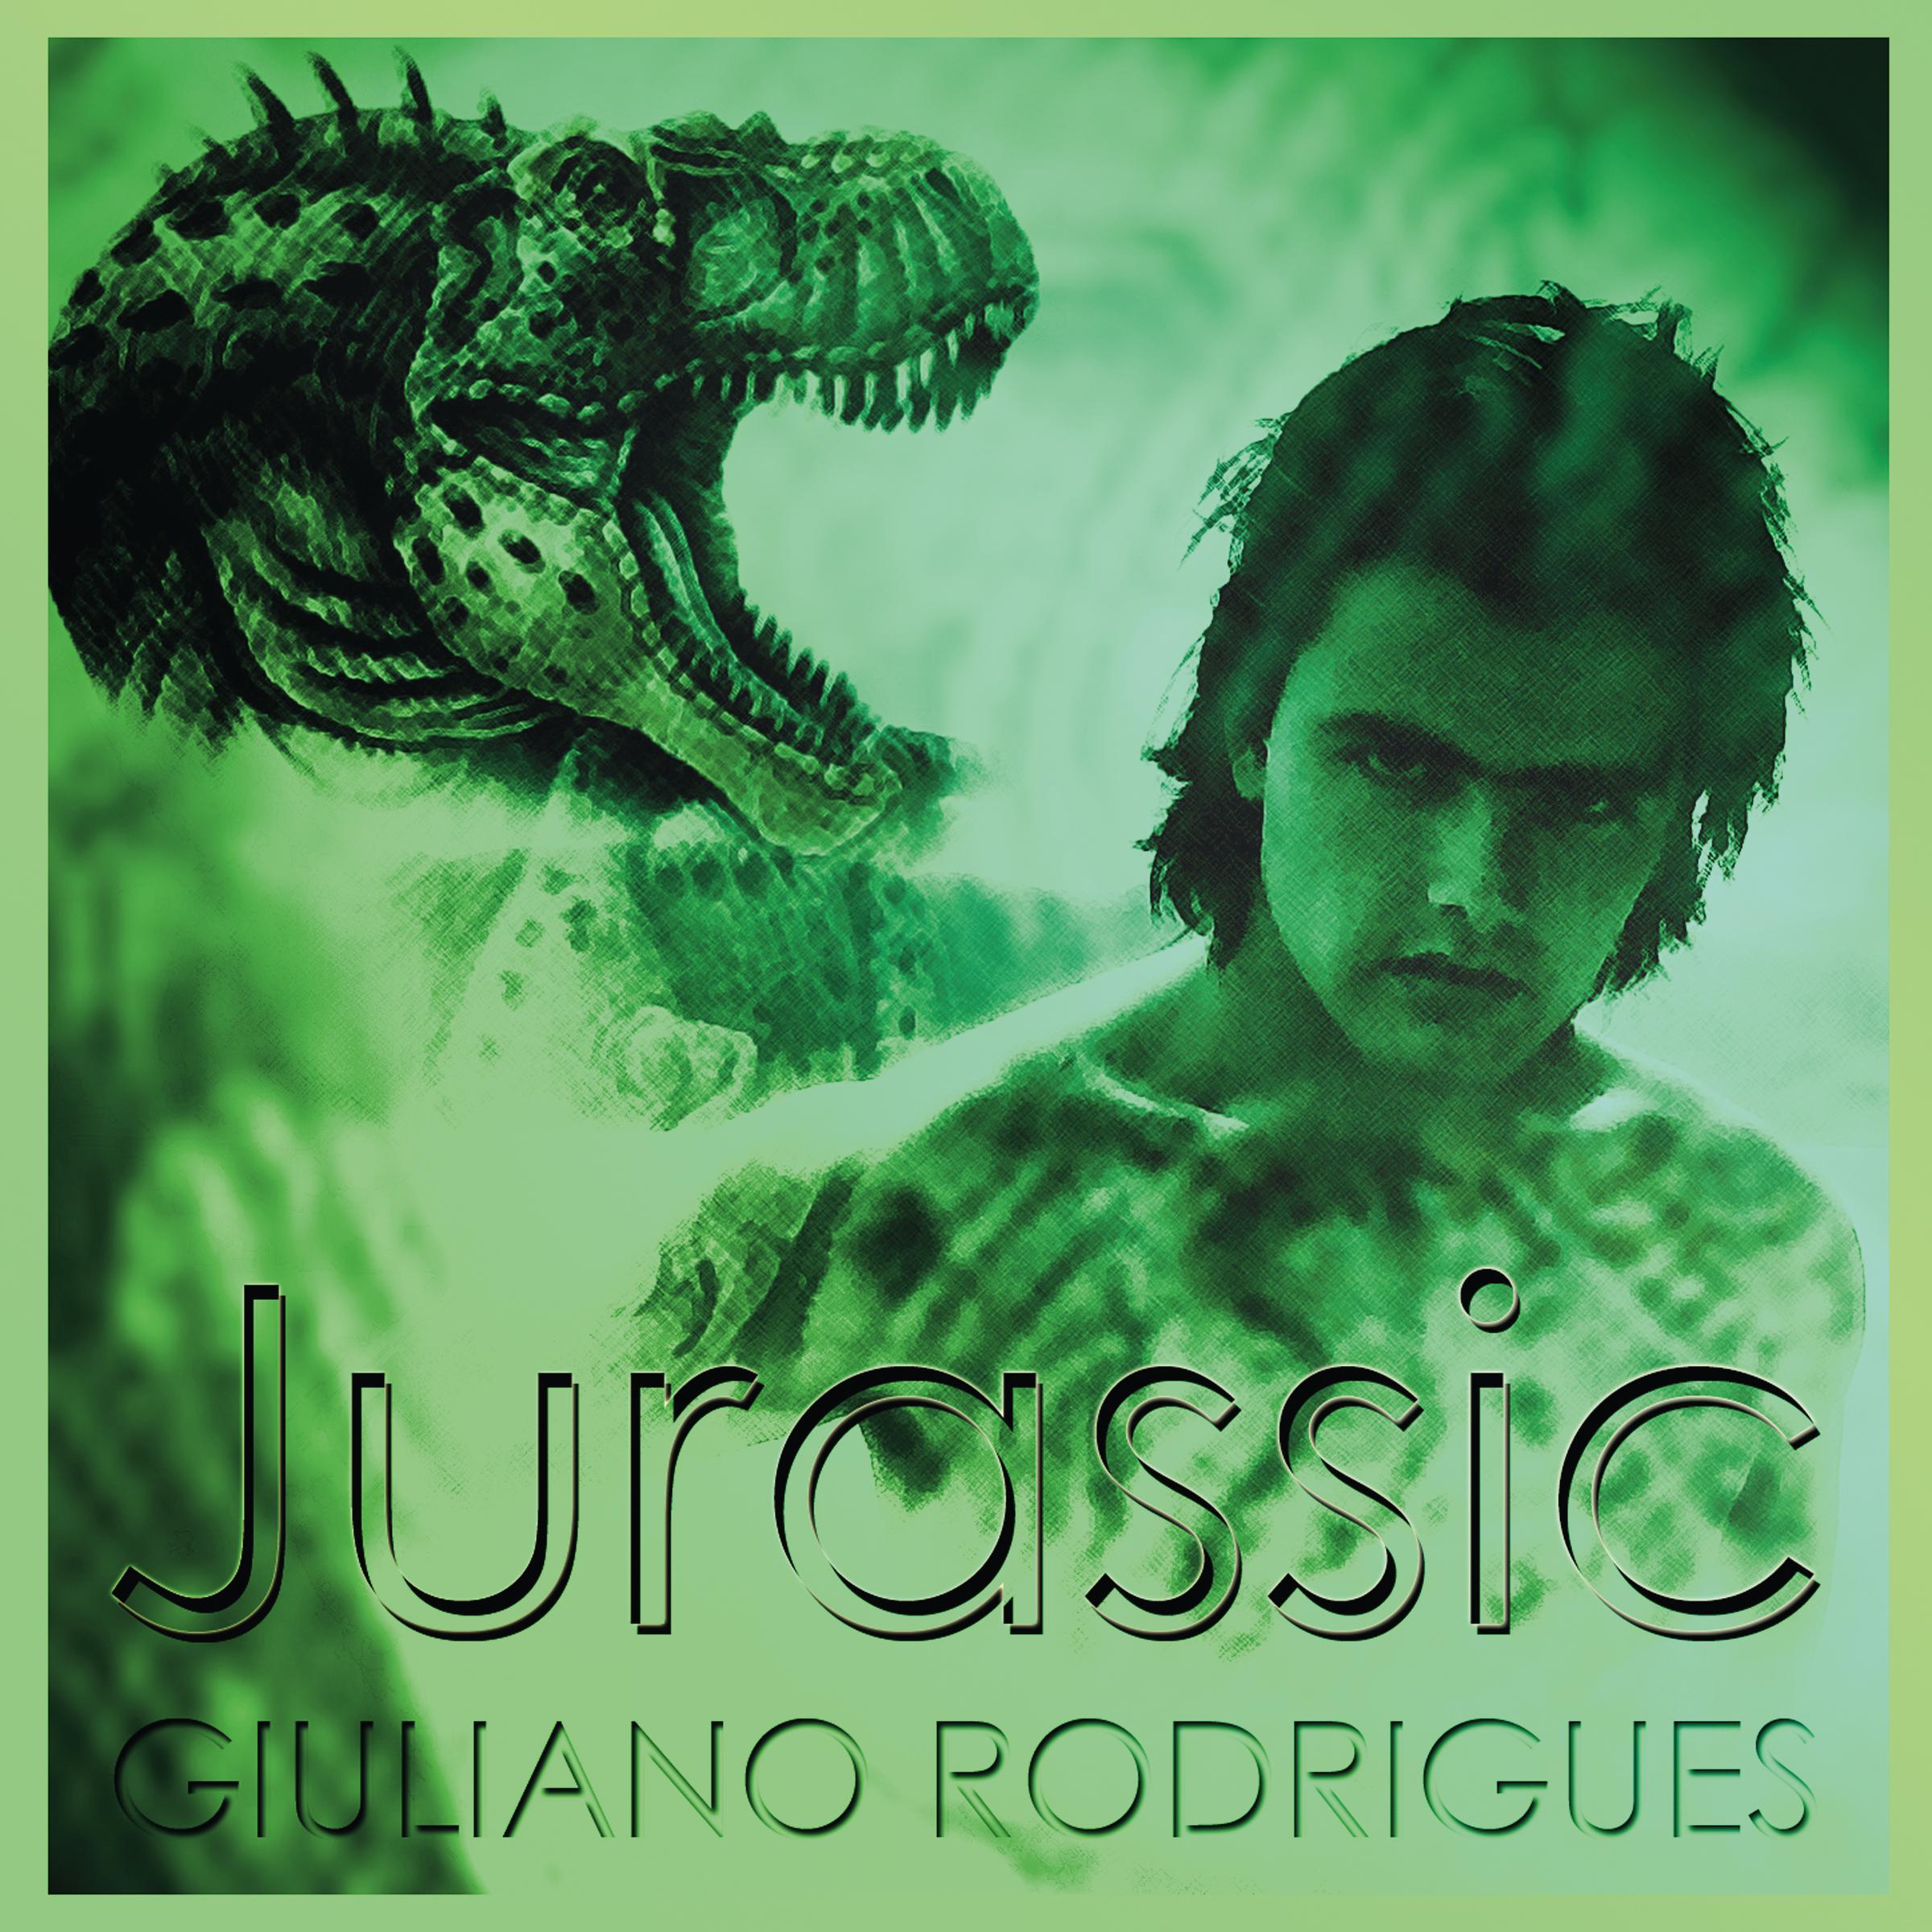 Giuliano Rodrigues - Jurassic